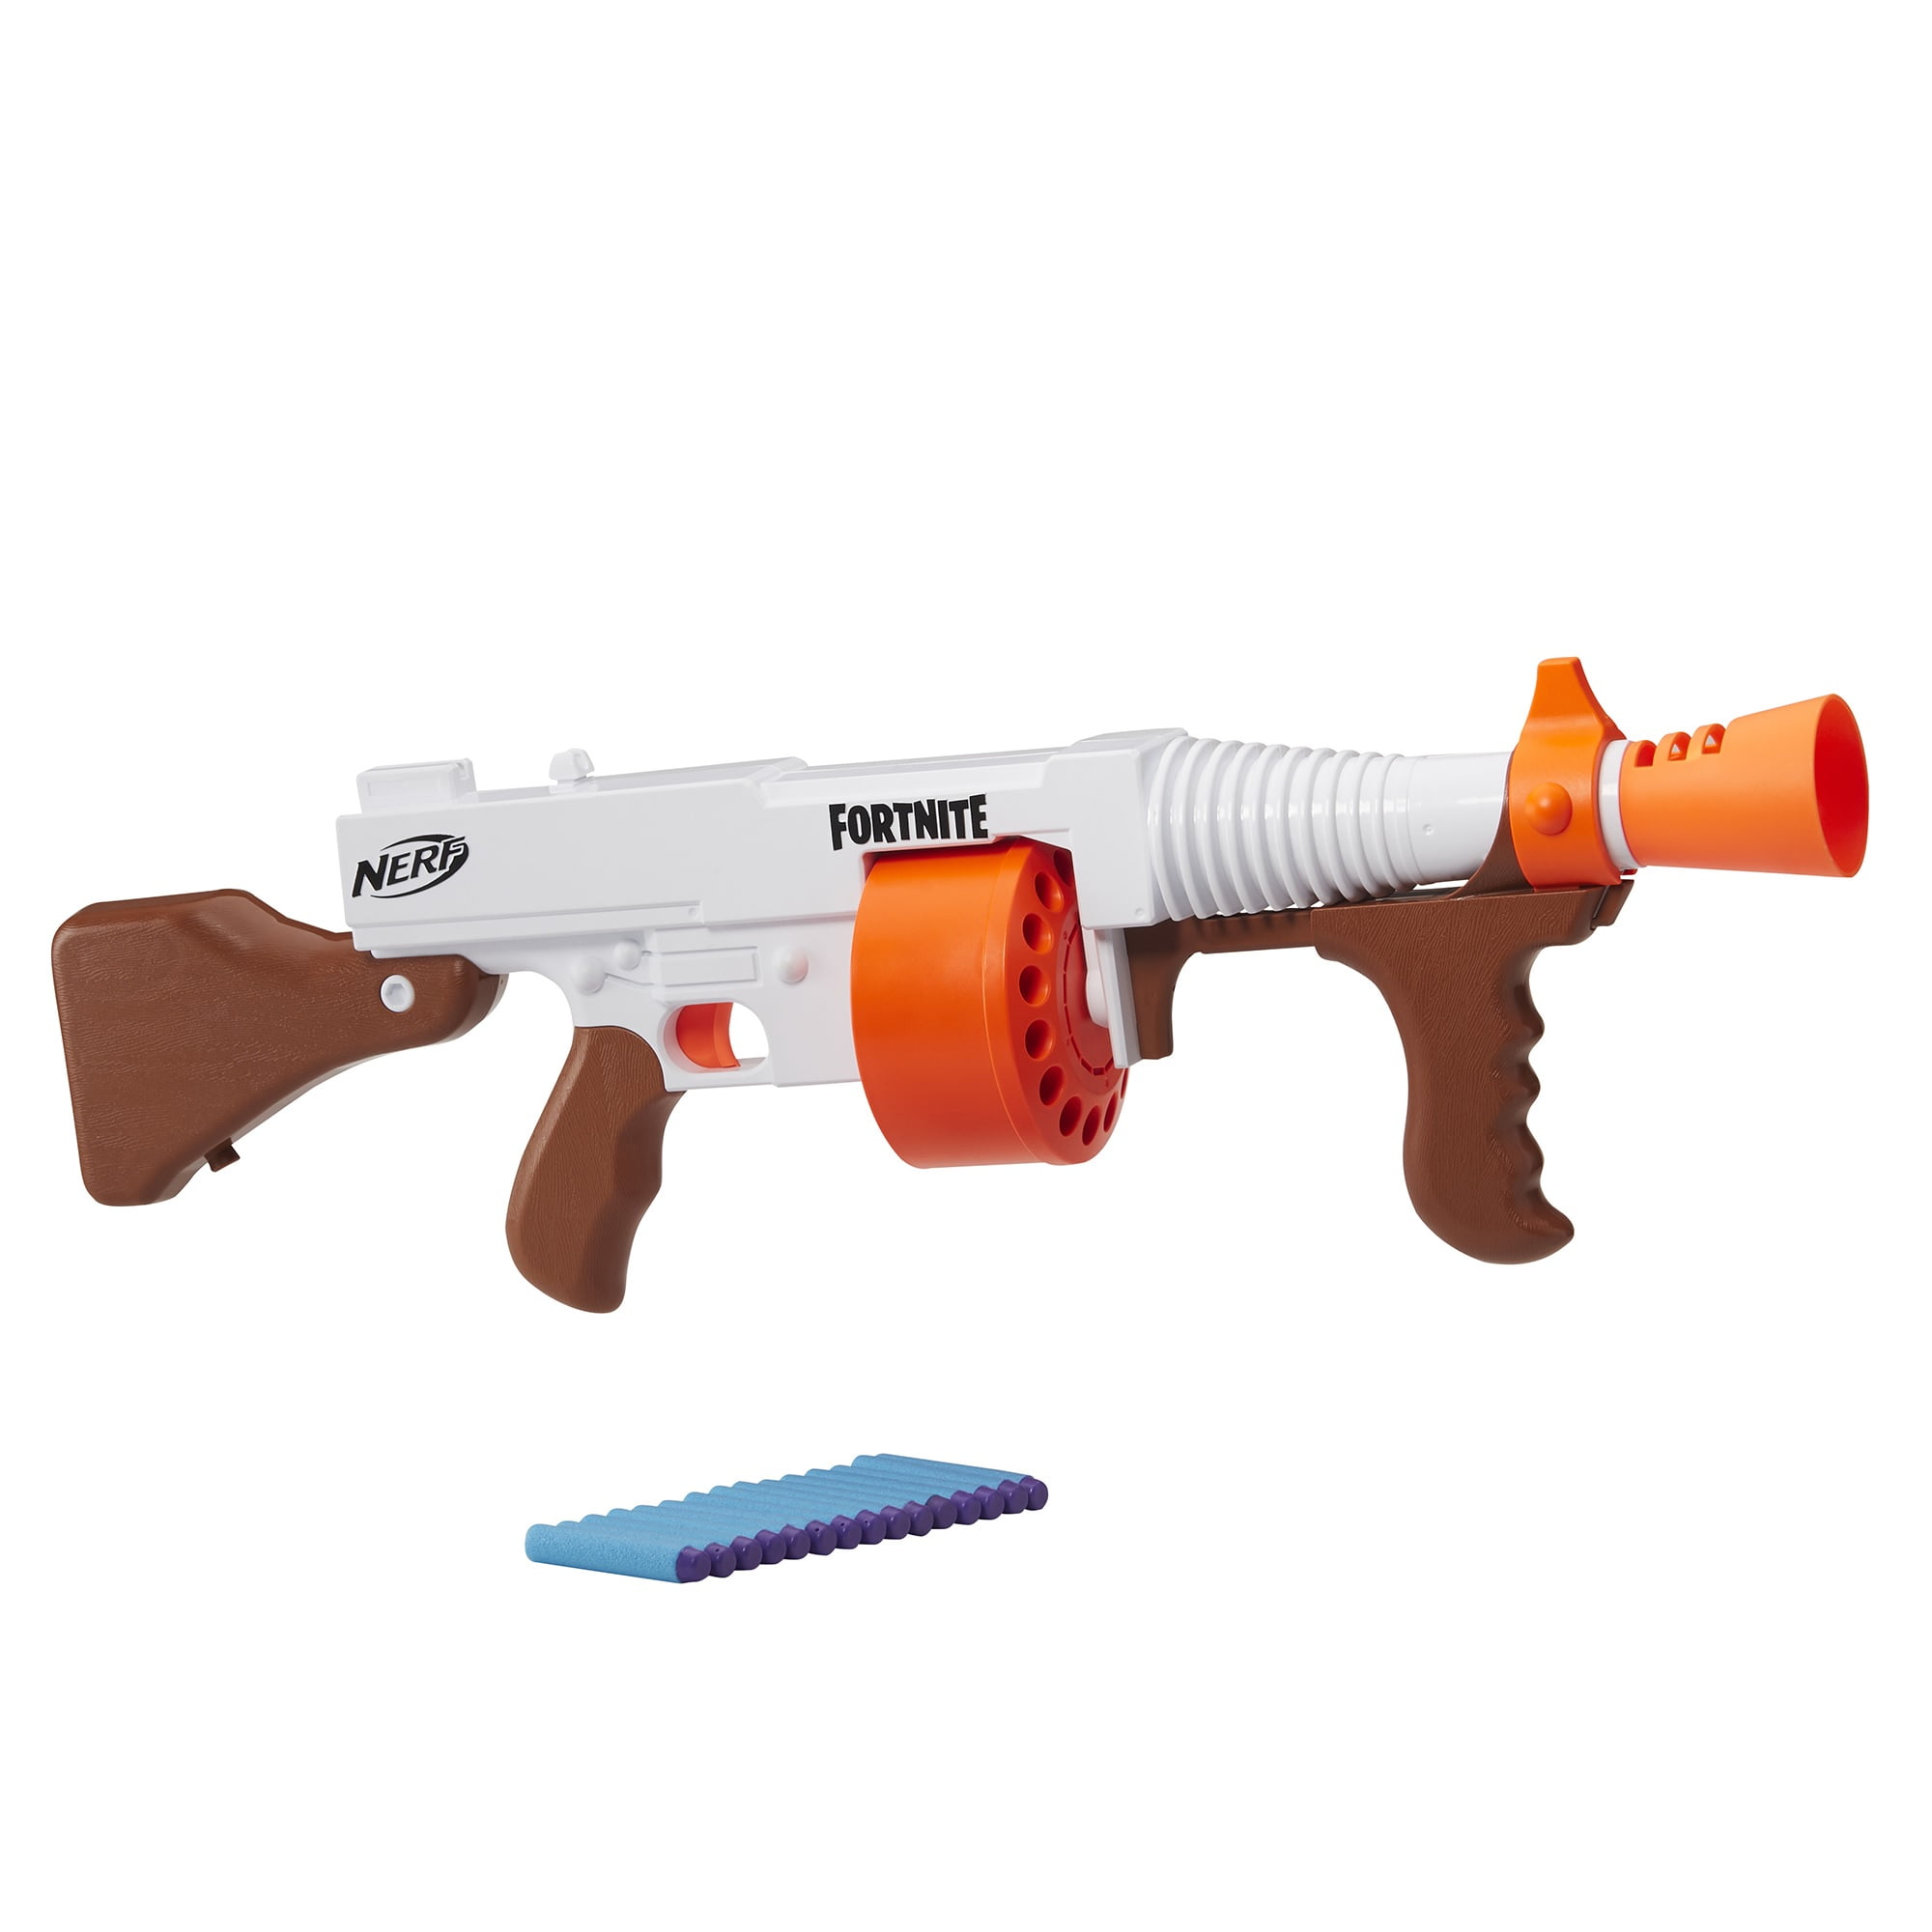 E7521 NERF Fortnite DG Dart Blaster Toy with 15 Darts White for sale online 